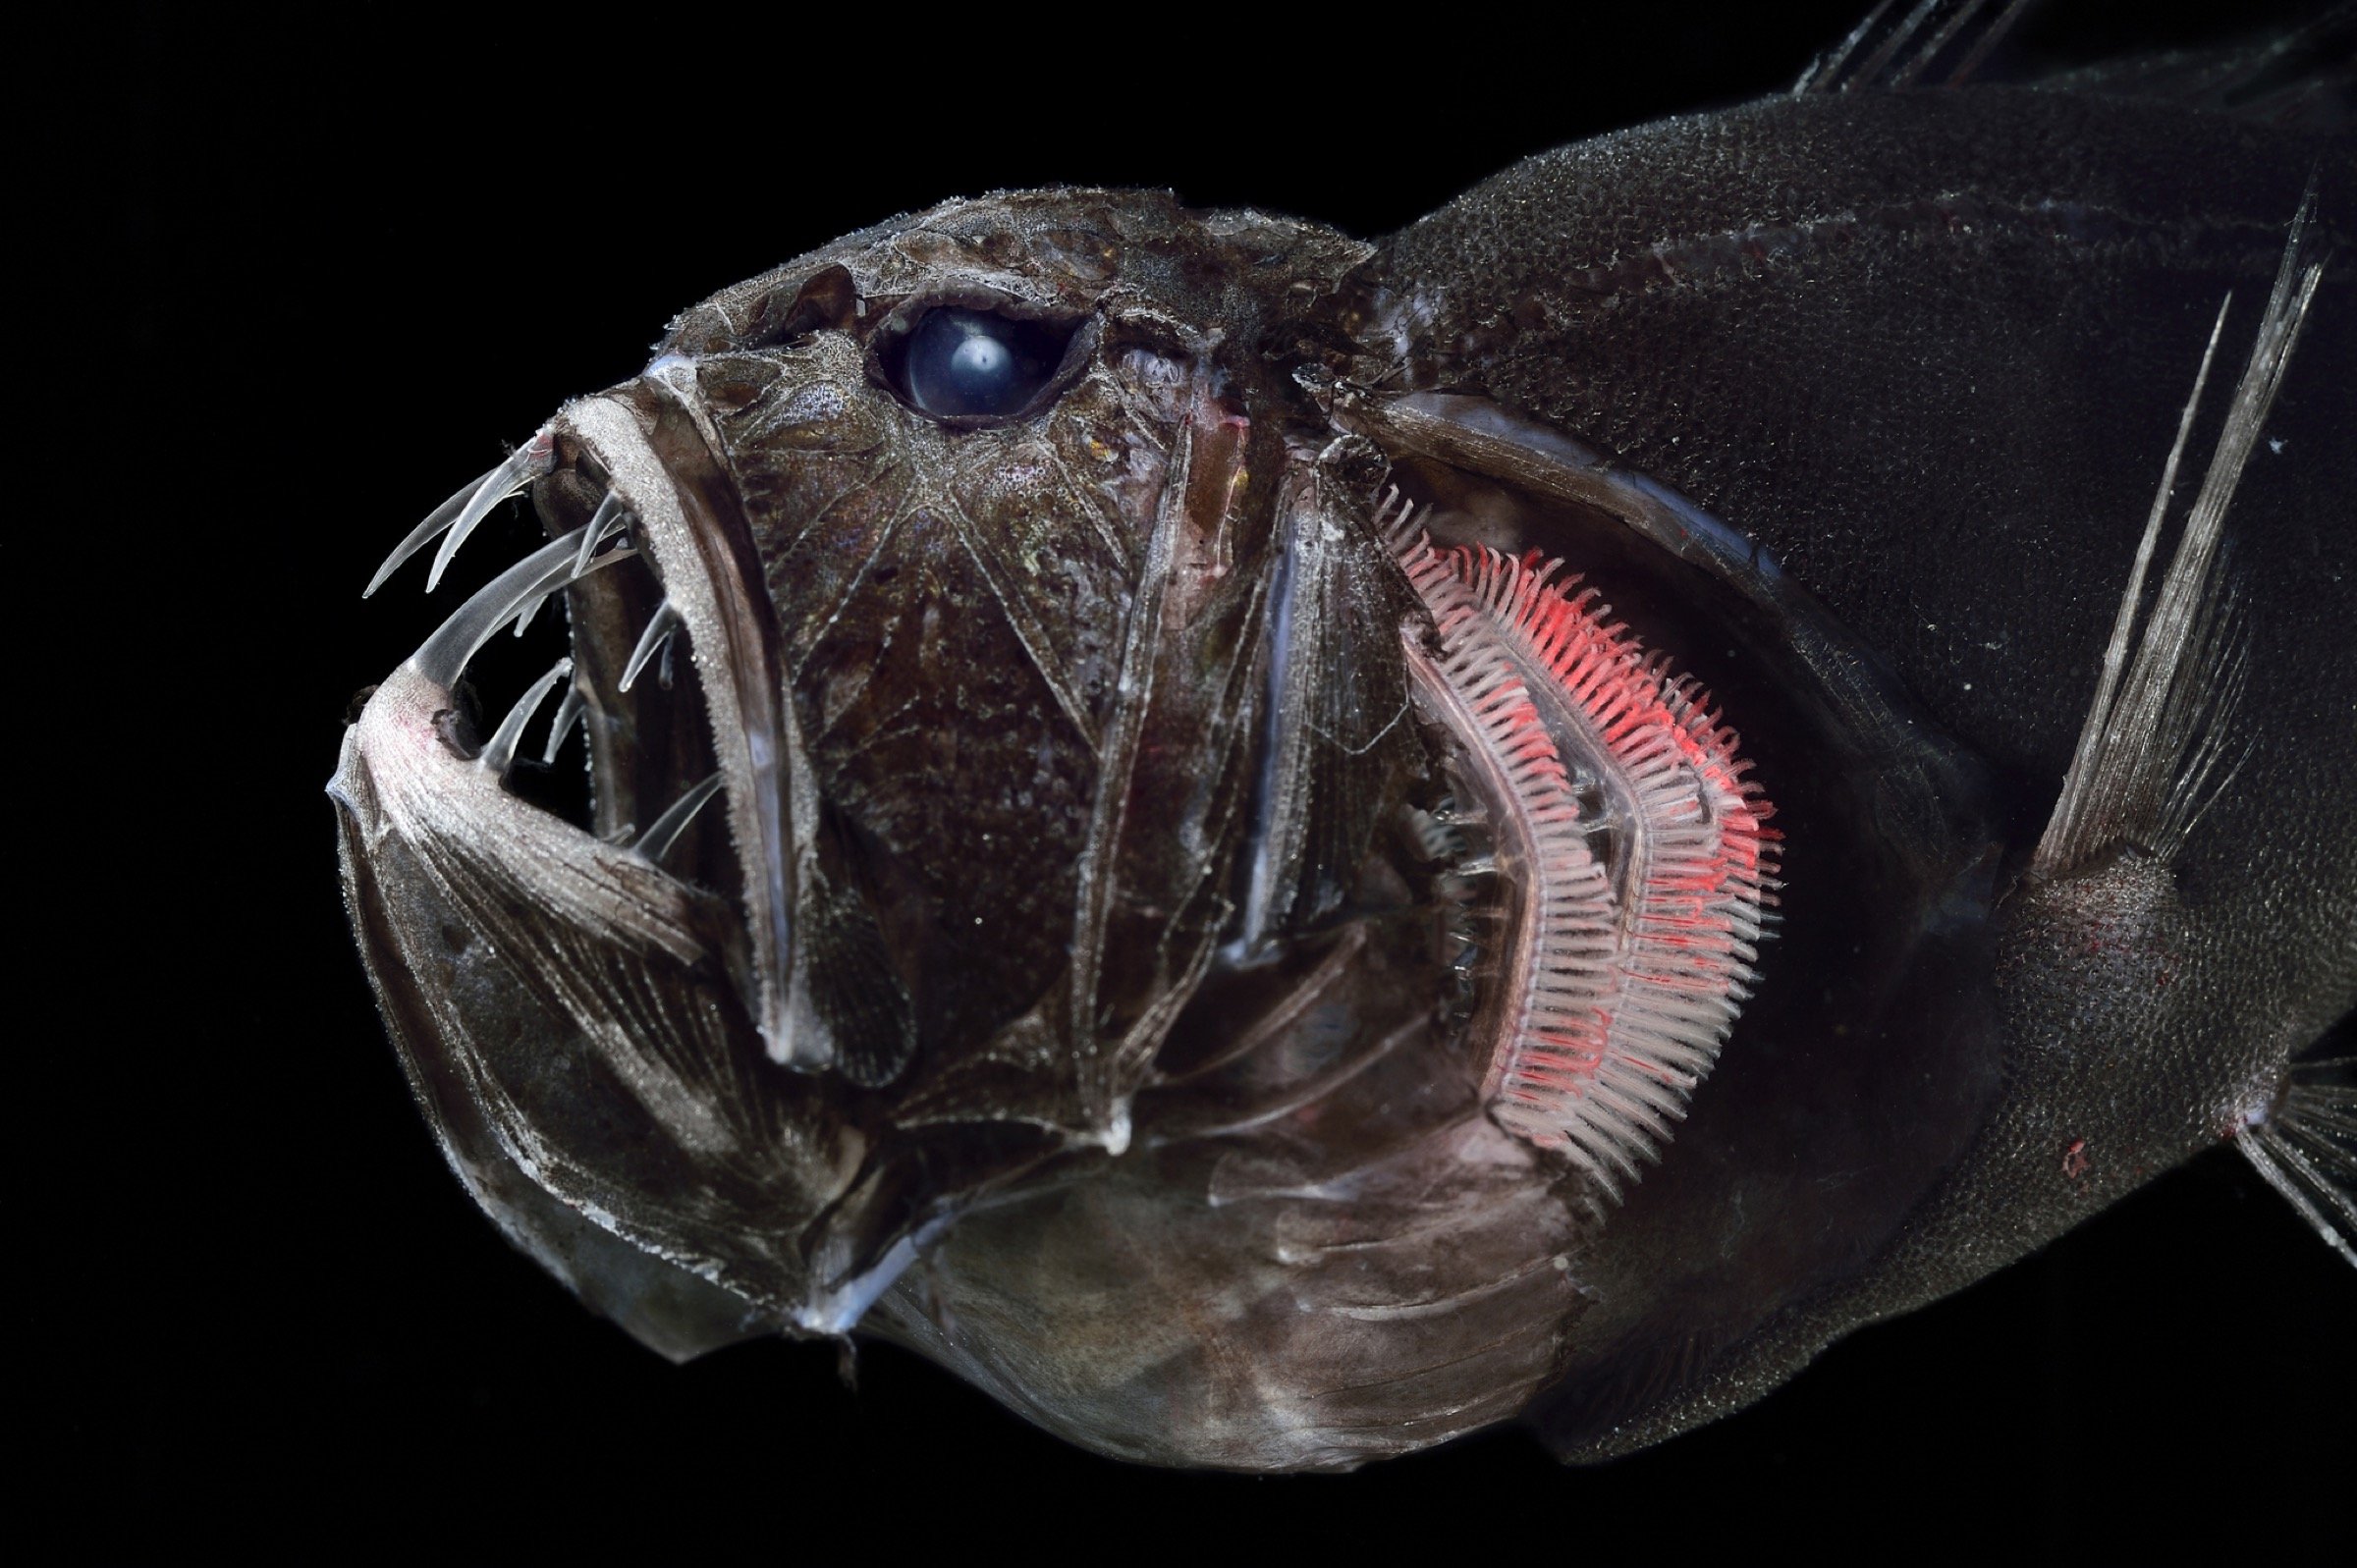 Fish creature. Длиннорогий Саблезуб. Тихоокеанский идиакант. Длиннорогий Саблезуб рыба. Саблезуб (Anoplogaster cornuta).